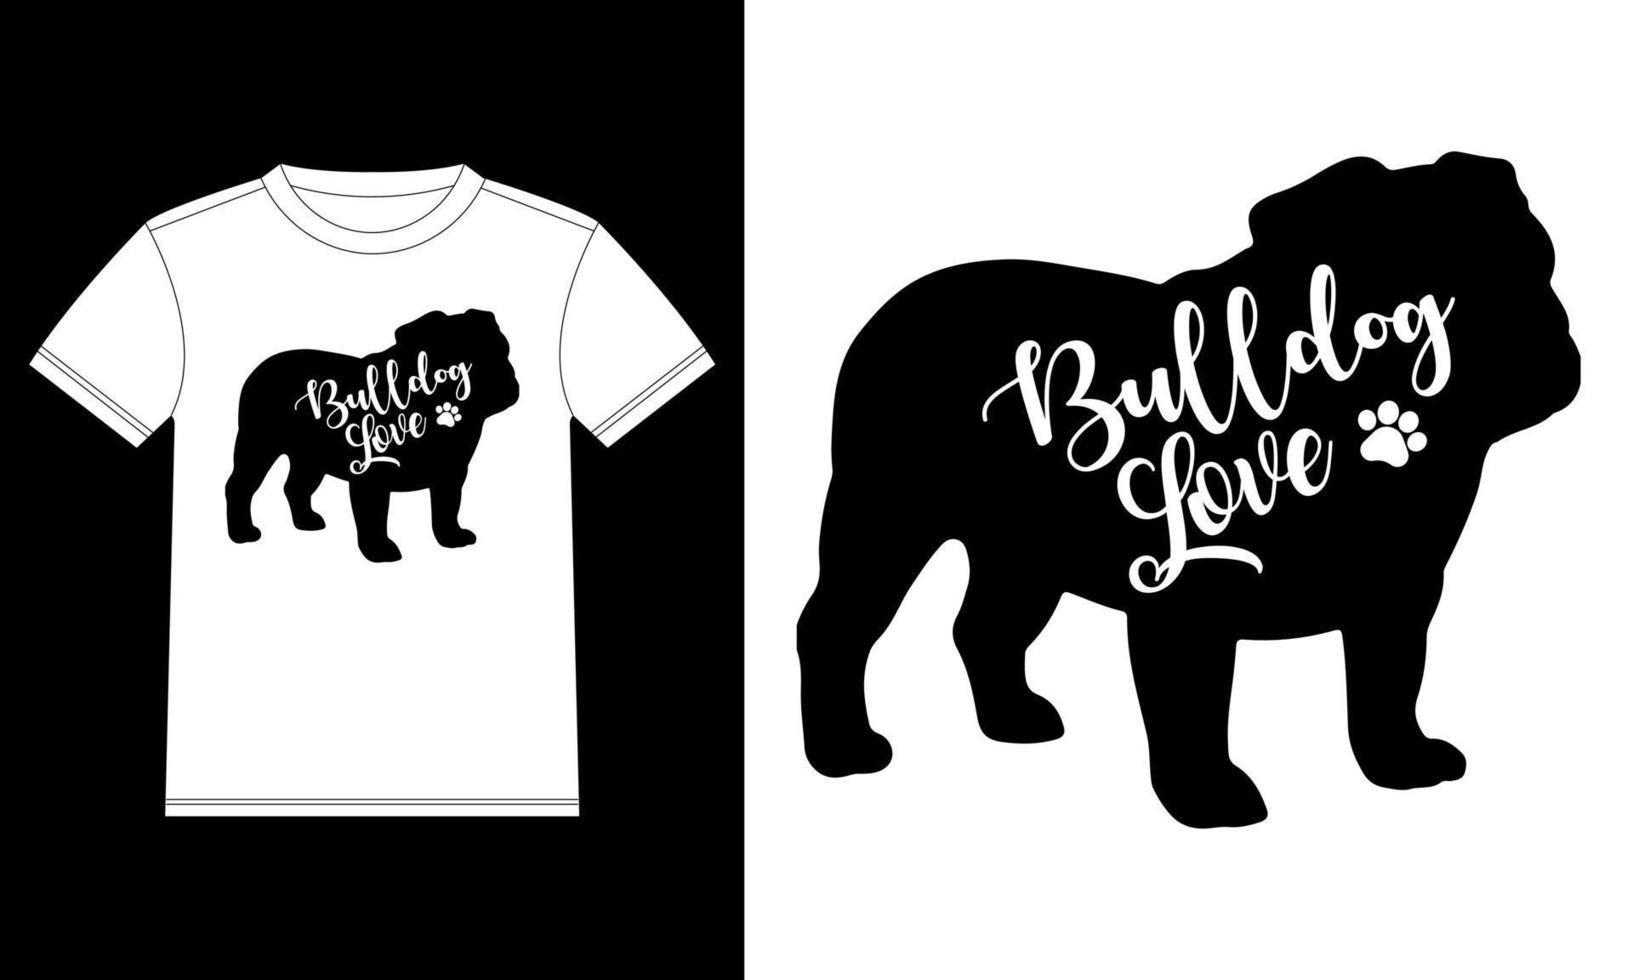 leven is bulldog cadeaus t-shirt ontwerp sjabloon, auto venster sticker, peul, omslag, geïsoleerd zwart achtergrond vector